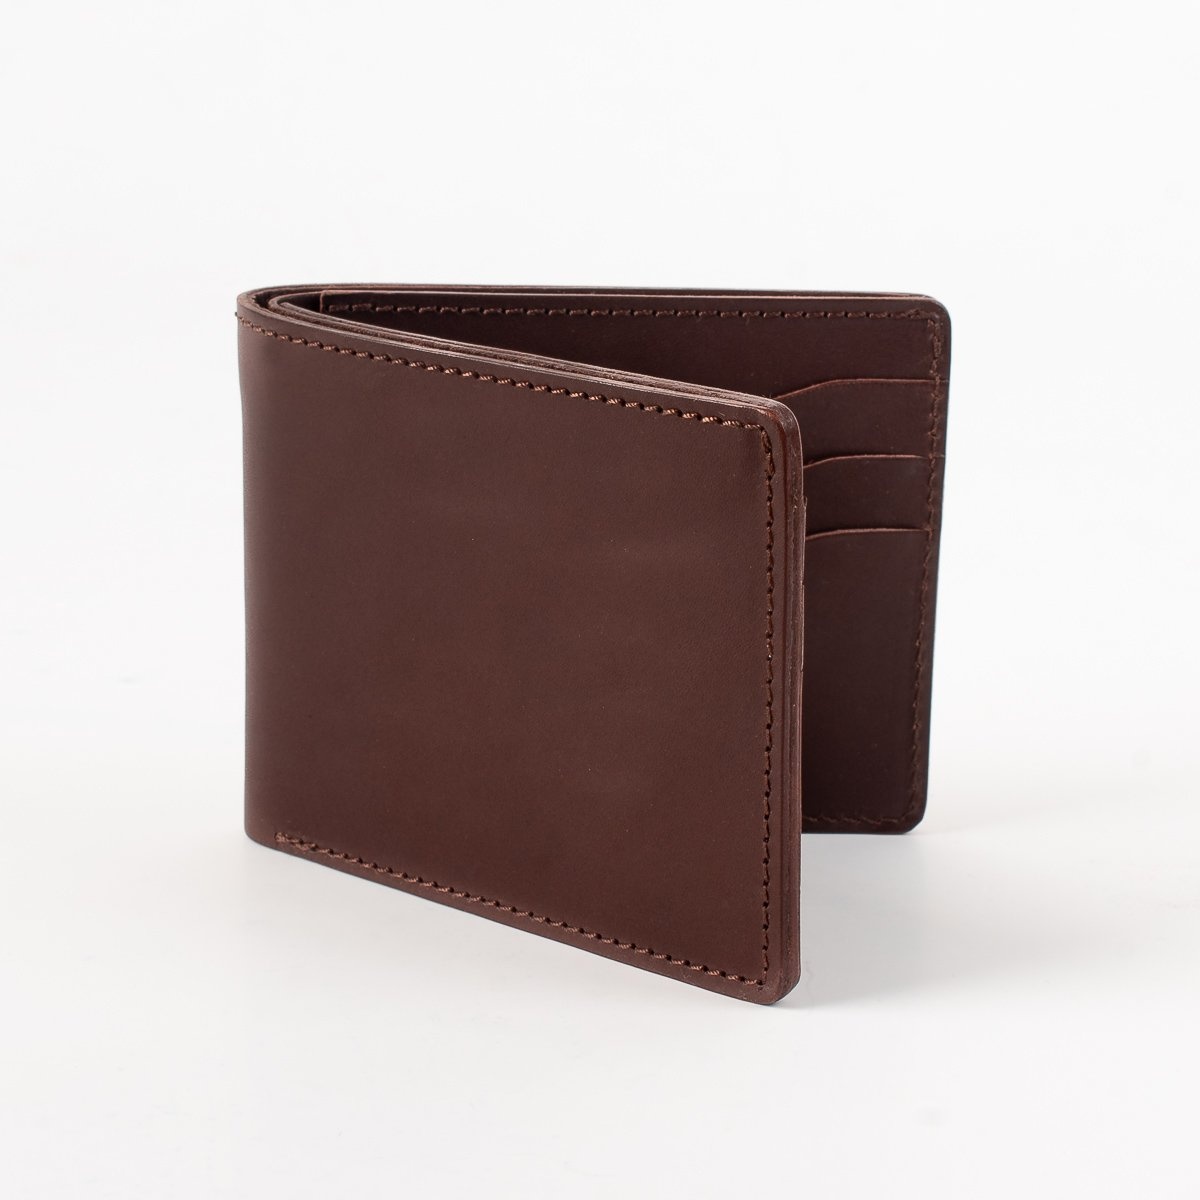 OGL-KINGSMAN-BF OGL Kingsman Classic Bi Fold Wallet - Black, Brown or Tan - 2